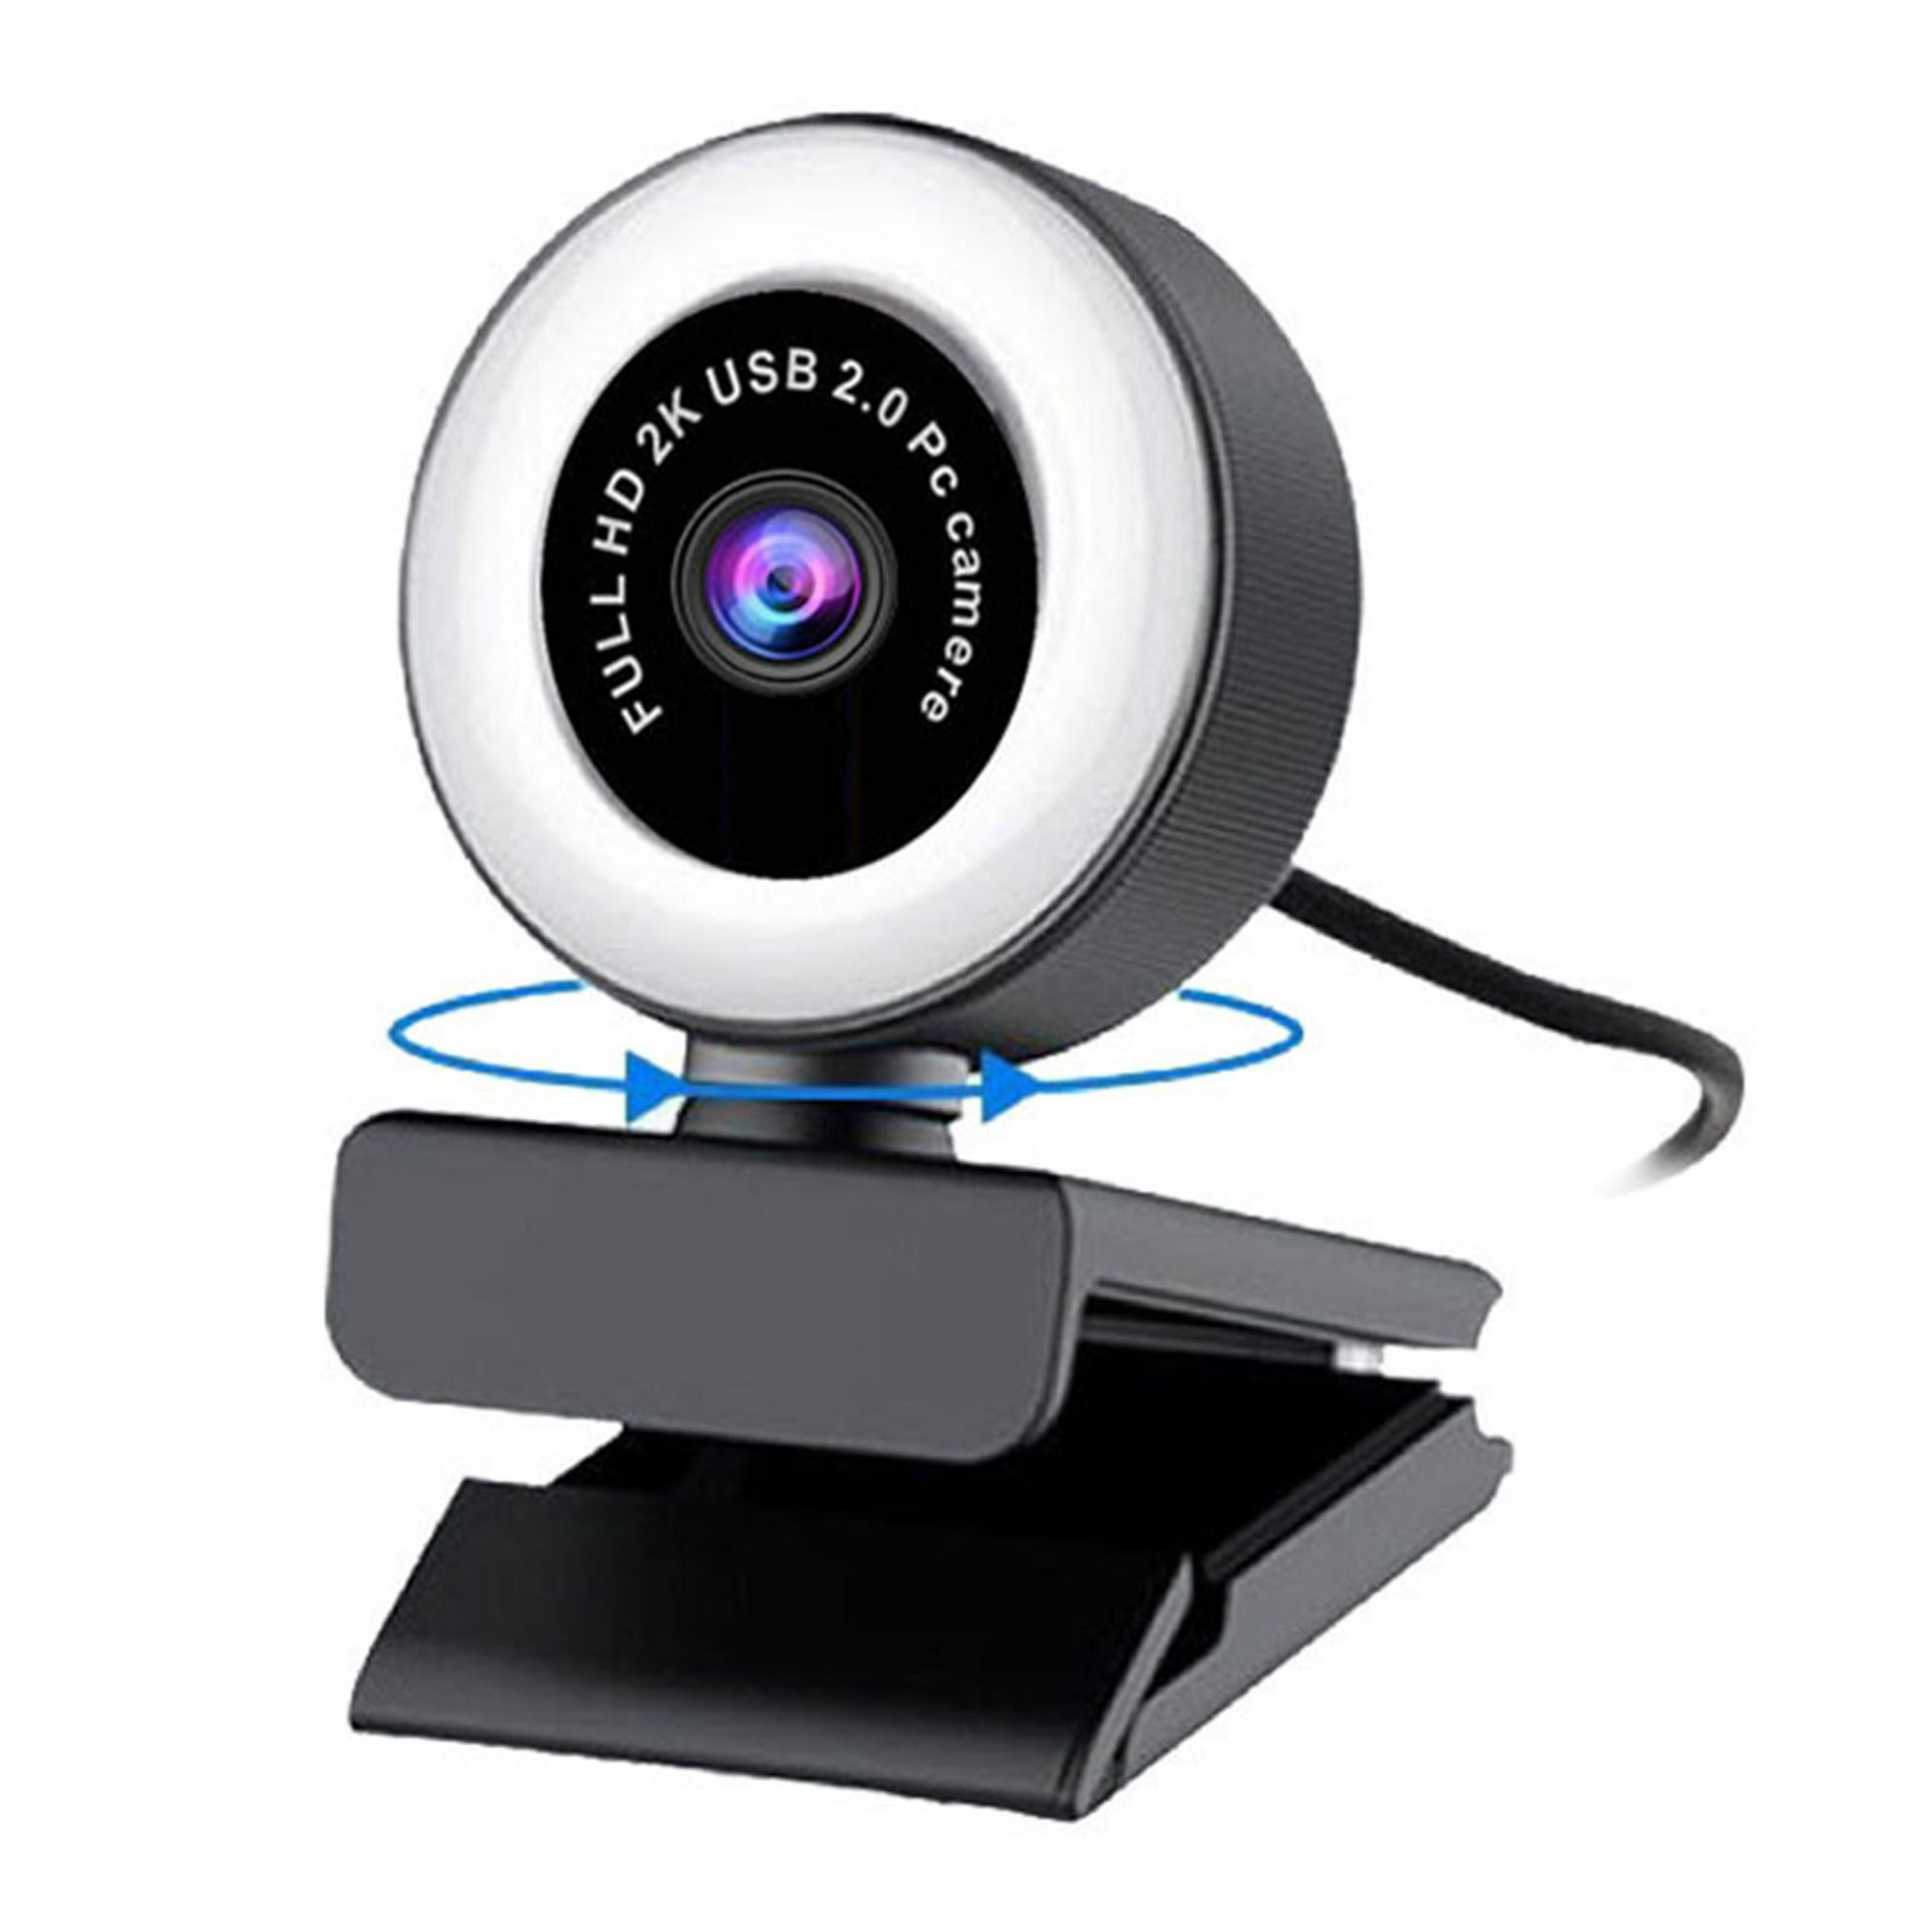 Webcam  Logitech C920, Full HD 1080p, Autofocus, Sonido Estéreo,  Corrección de Iluminación HD, Negro